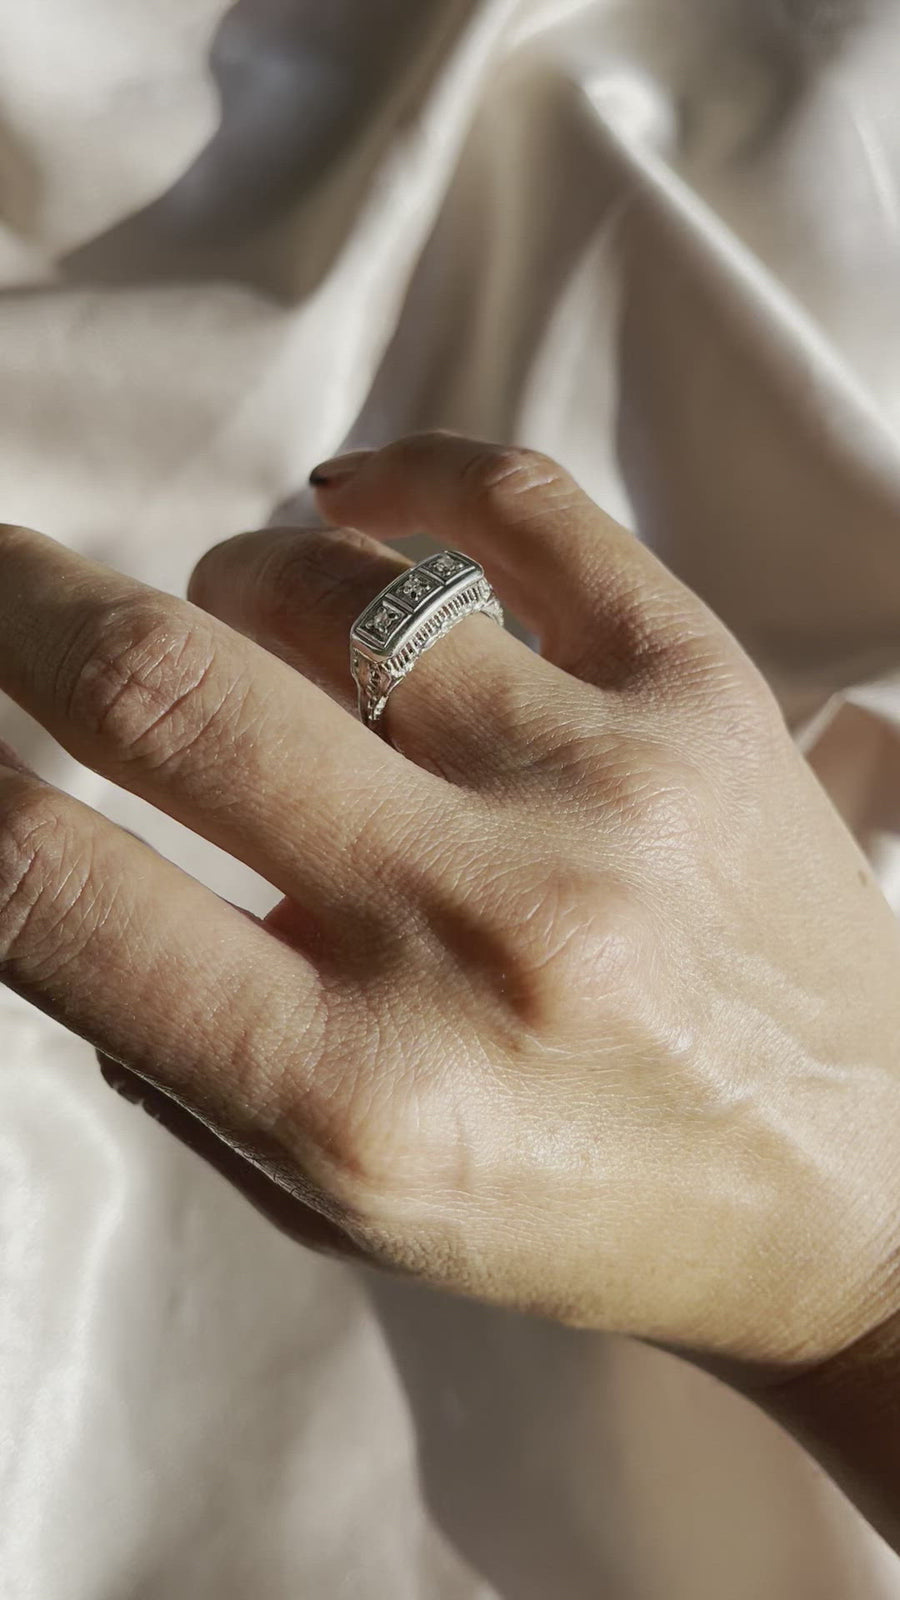 Video of Antique 14k White Gold Art Deco Filigree East-West Three Diamond Ring Alternative Wedding Engagement Bridal on Hand